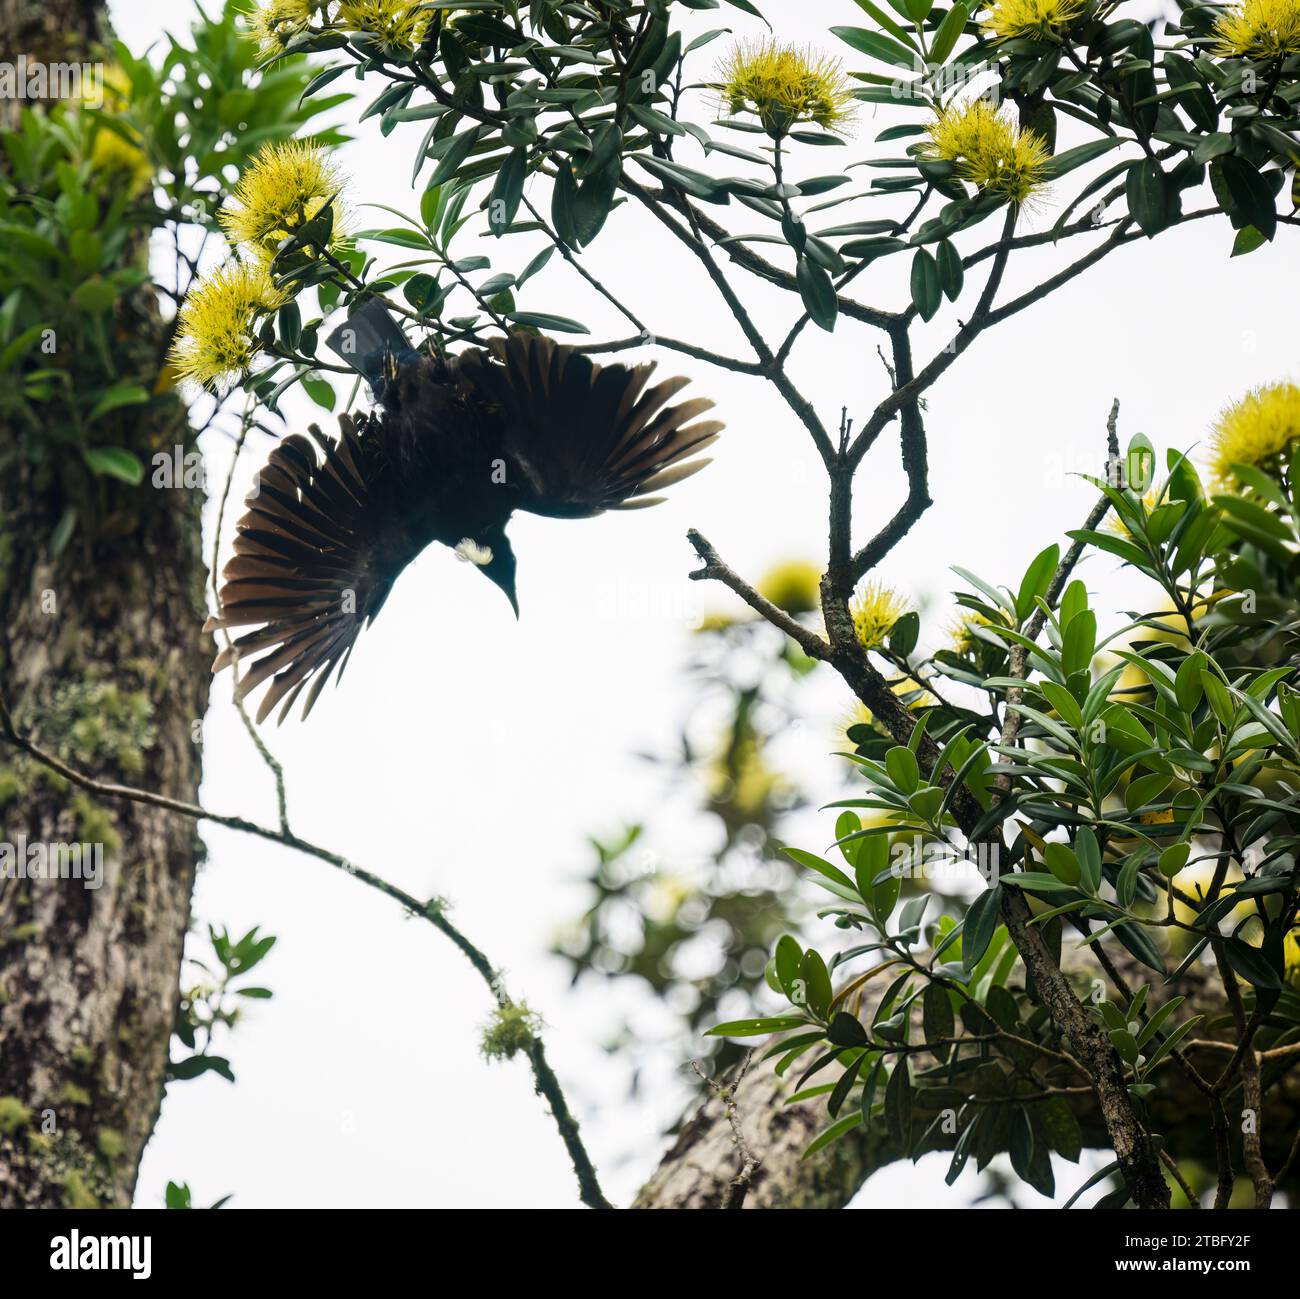 Tui bird taking off from yellow Pohutukawa flowers. Low angle view. New Zealand Christmas tree. Stock Photo